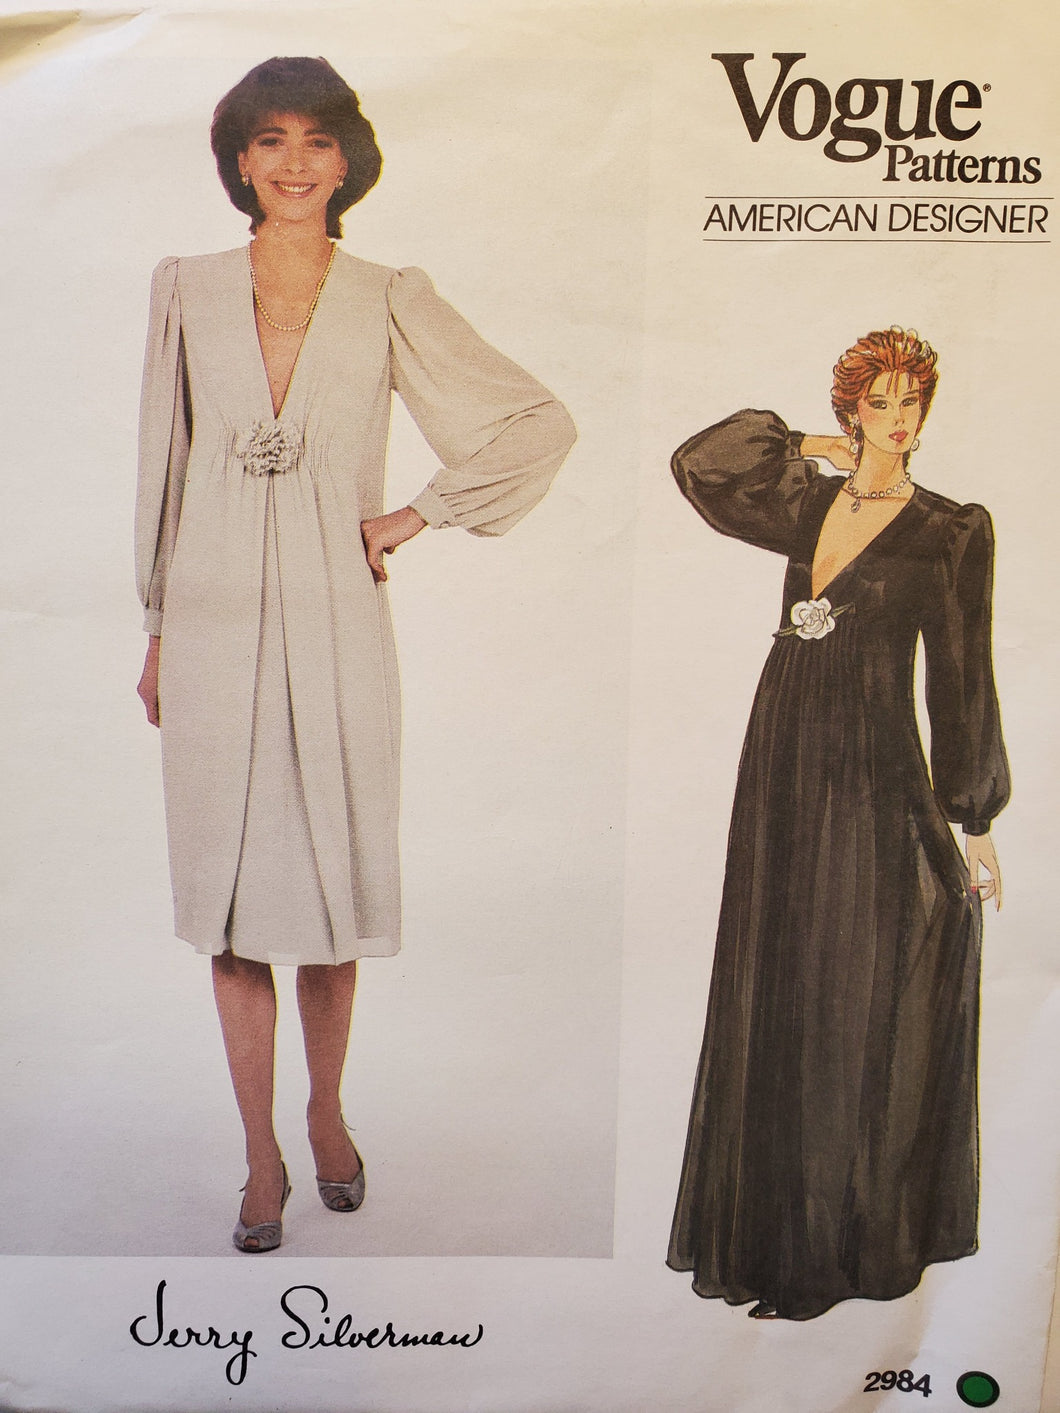 Vogue Pattern 2984 UNCUT, Designer Original Jerry Silverman, Dress Size 14, Vintage